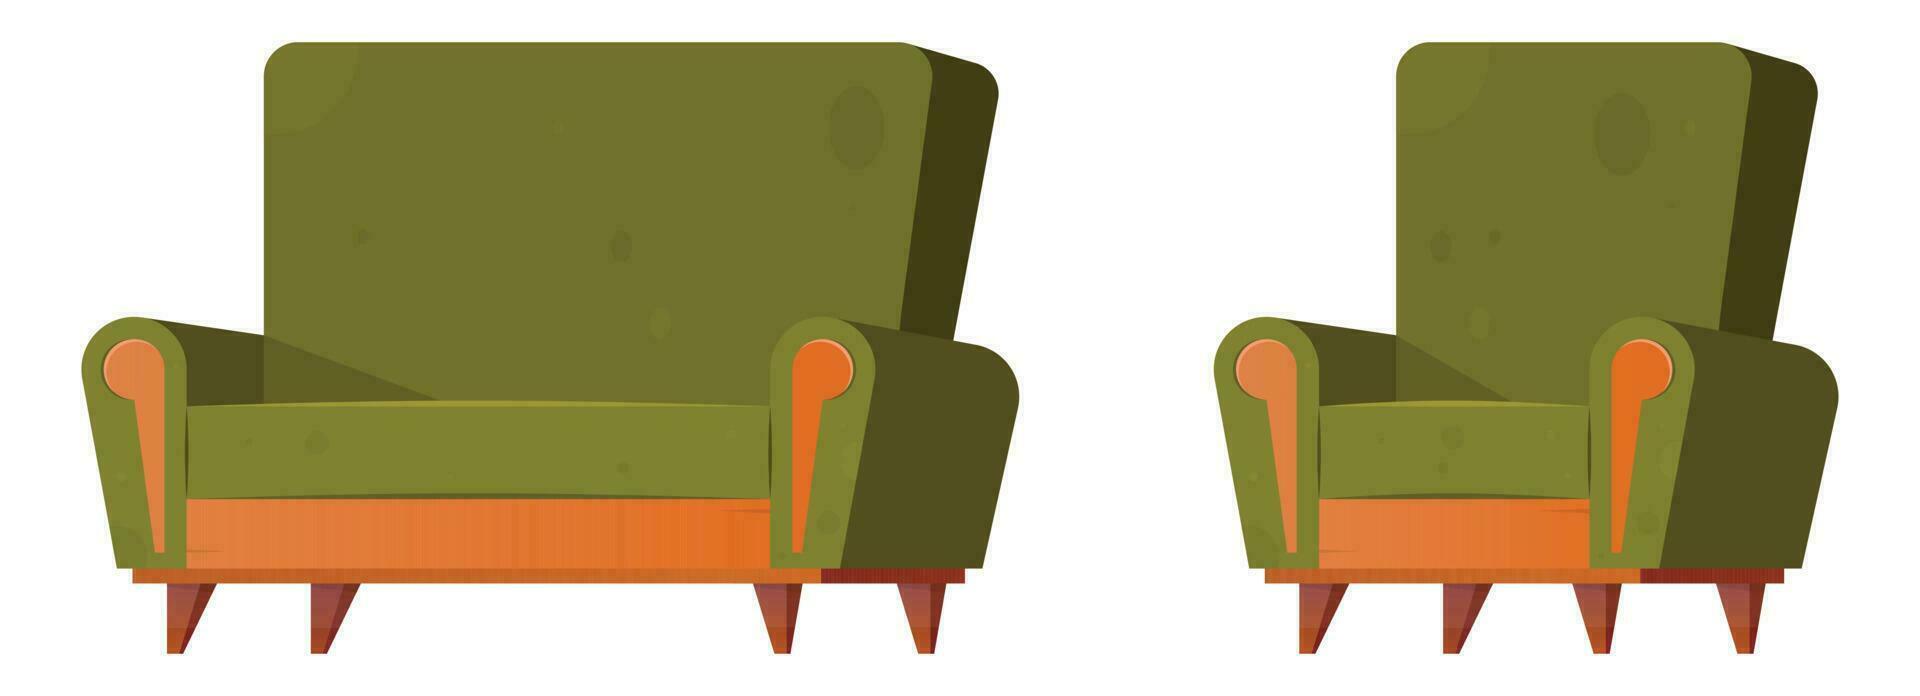 Cartoon armchair and sofa vector illustration isolated on white